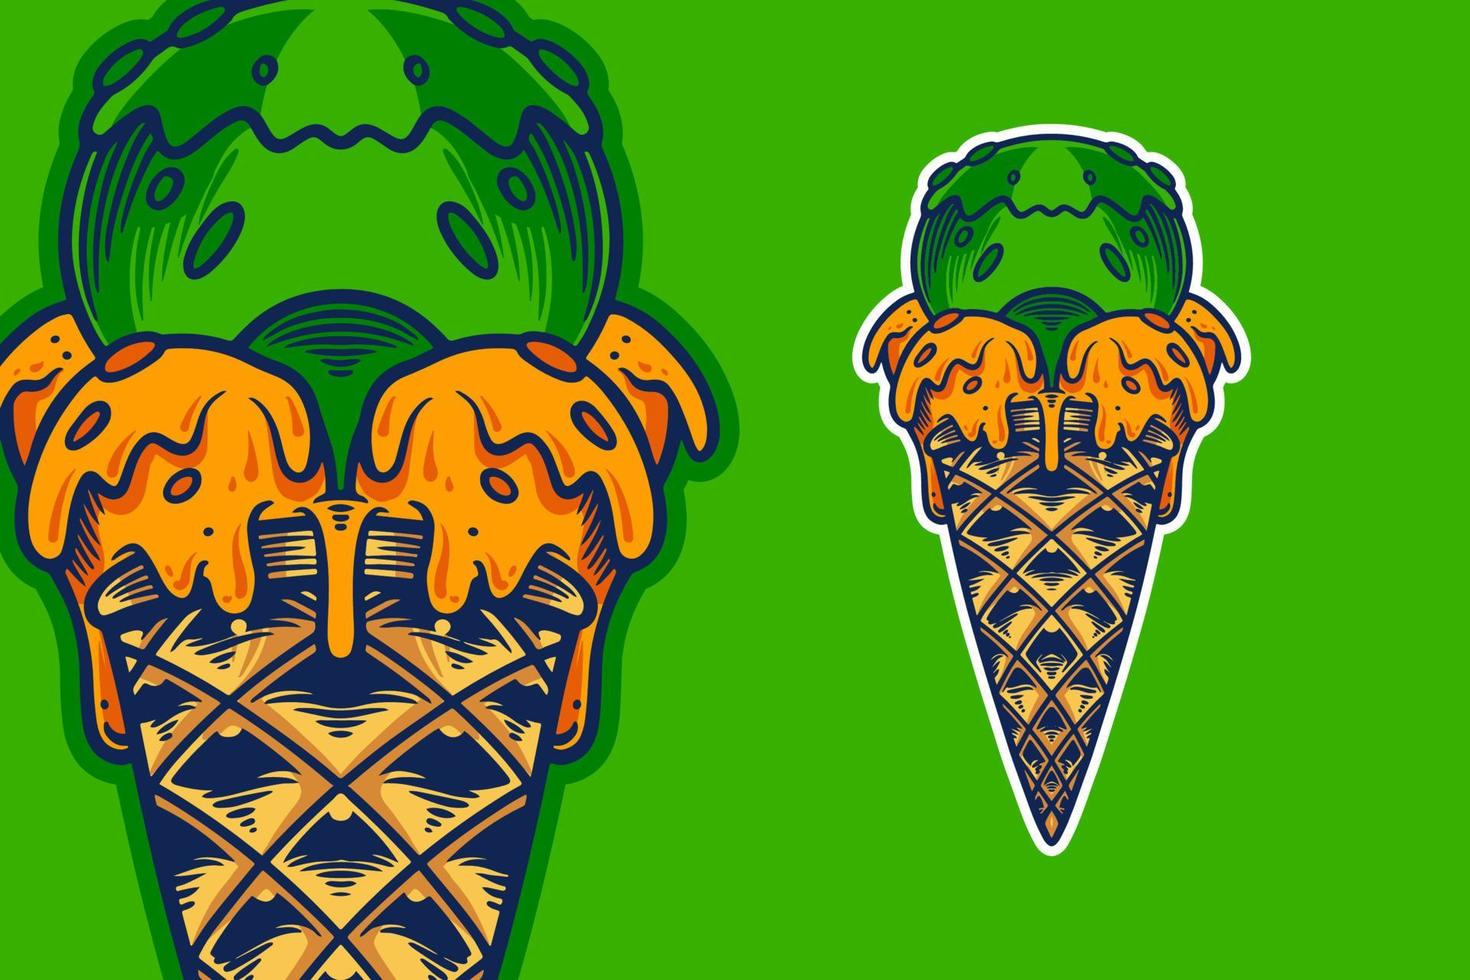 ice cream cone vector illustration cartoon style